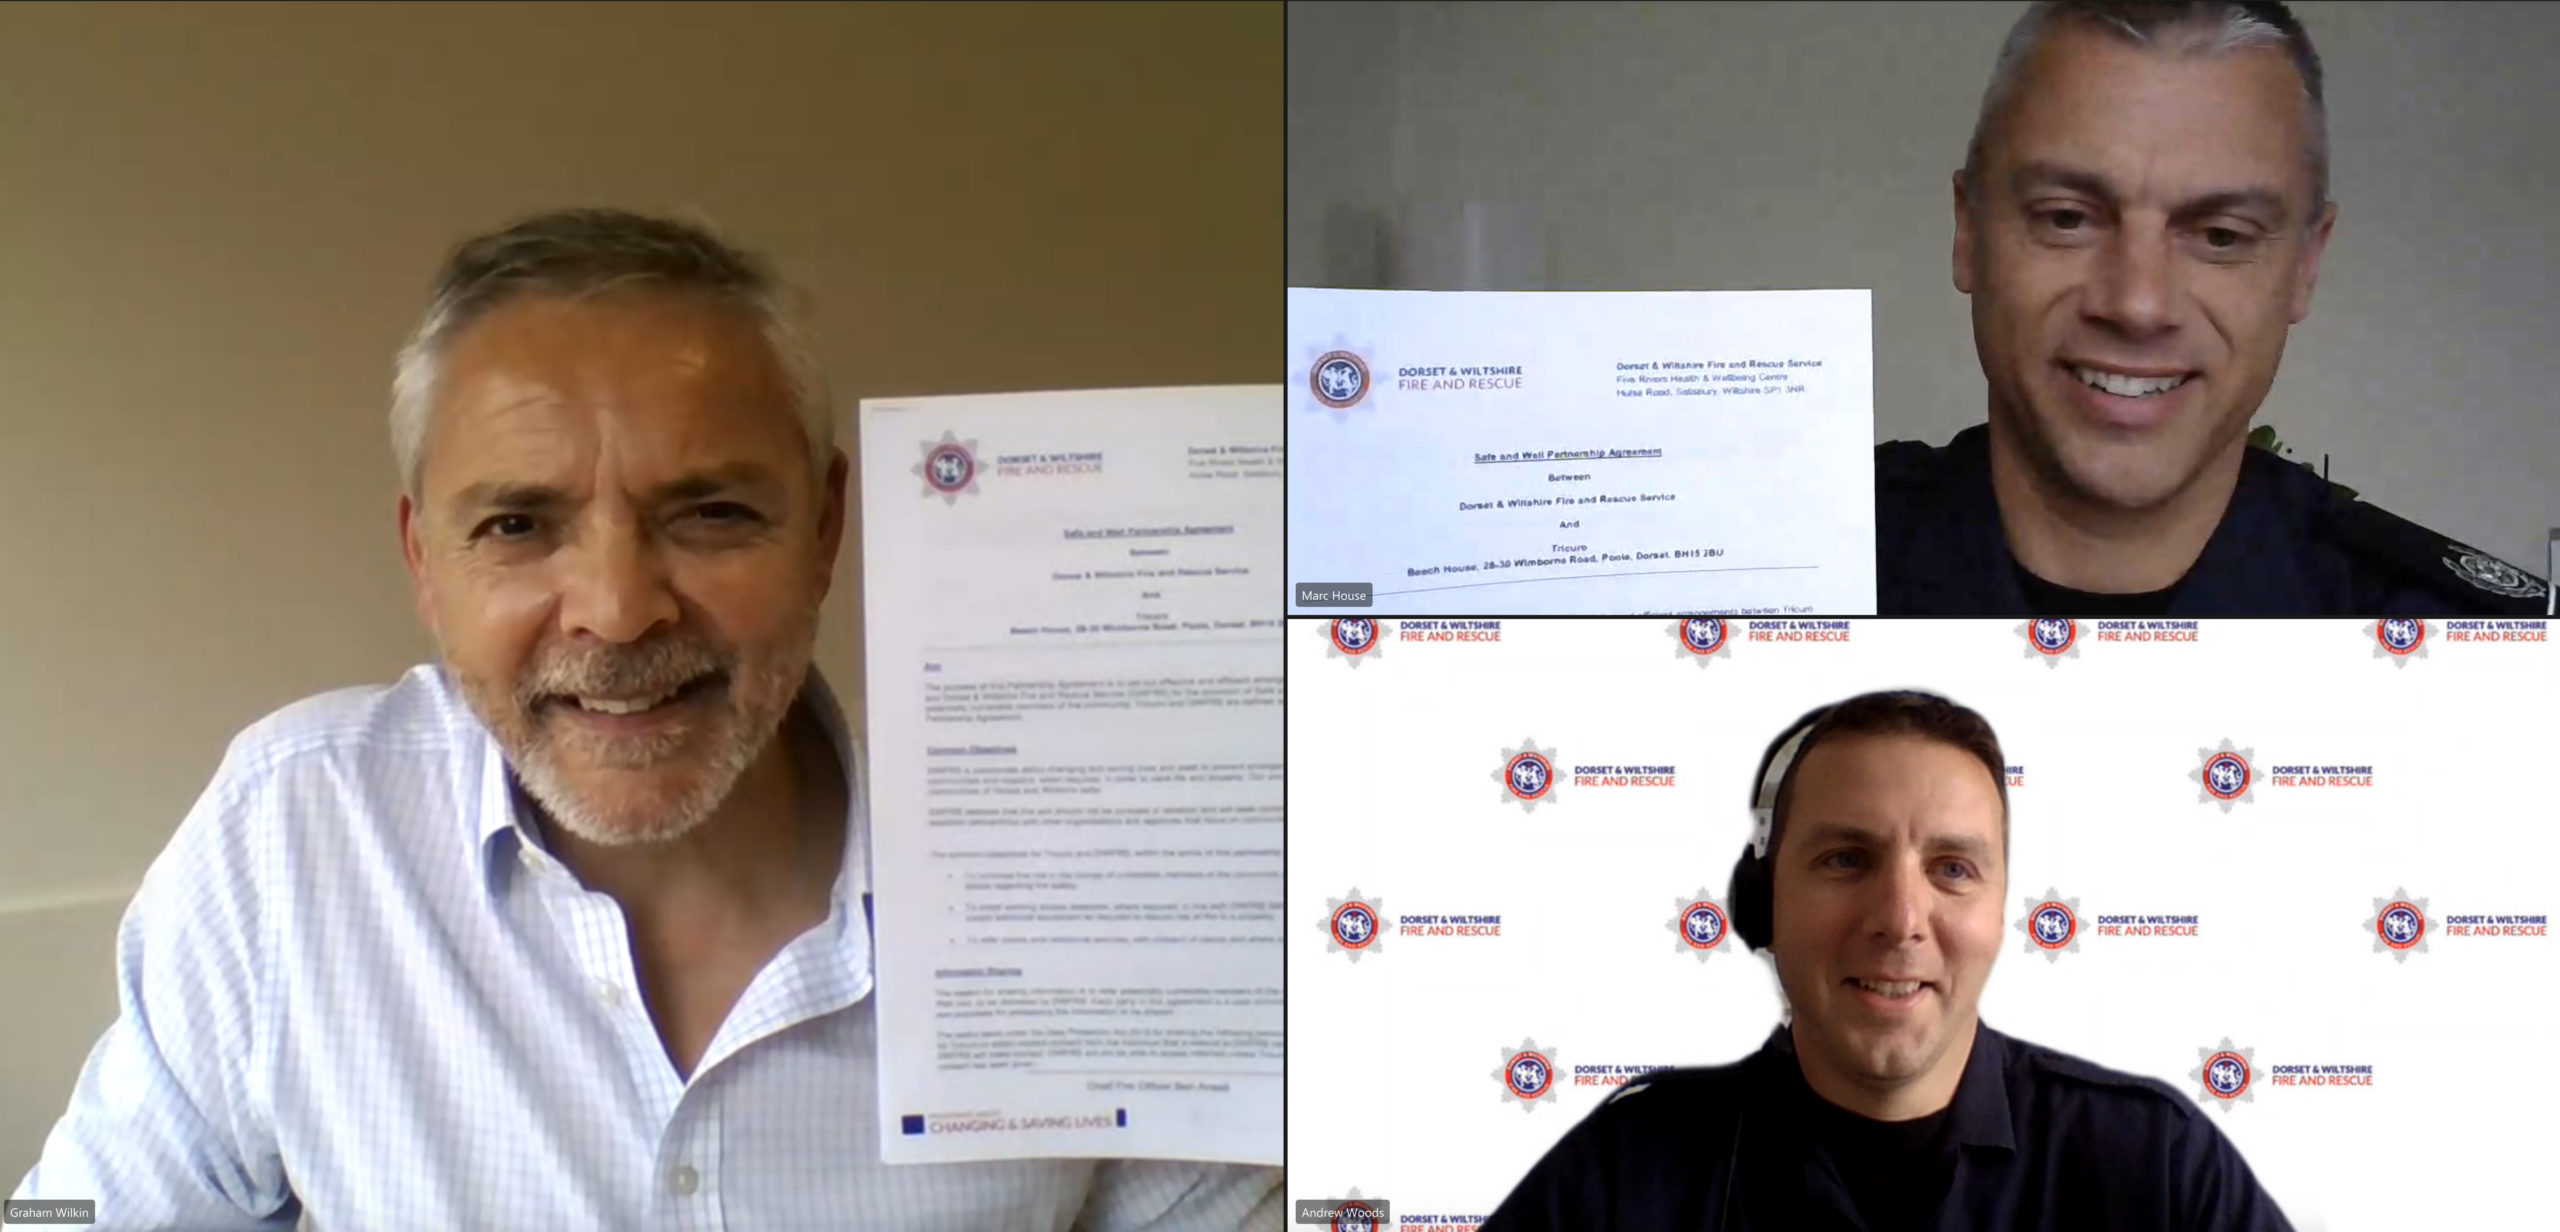 Screenshot of virtual signing between Tricuro and fire service representatives